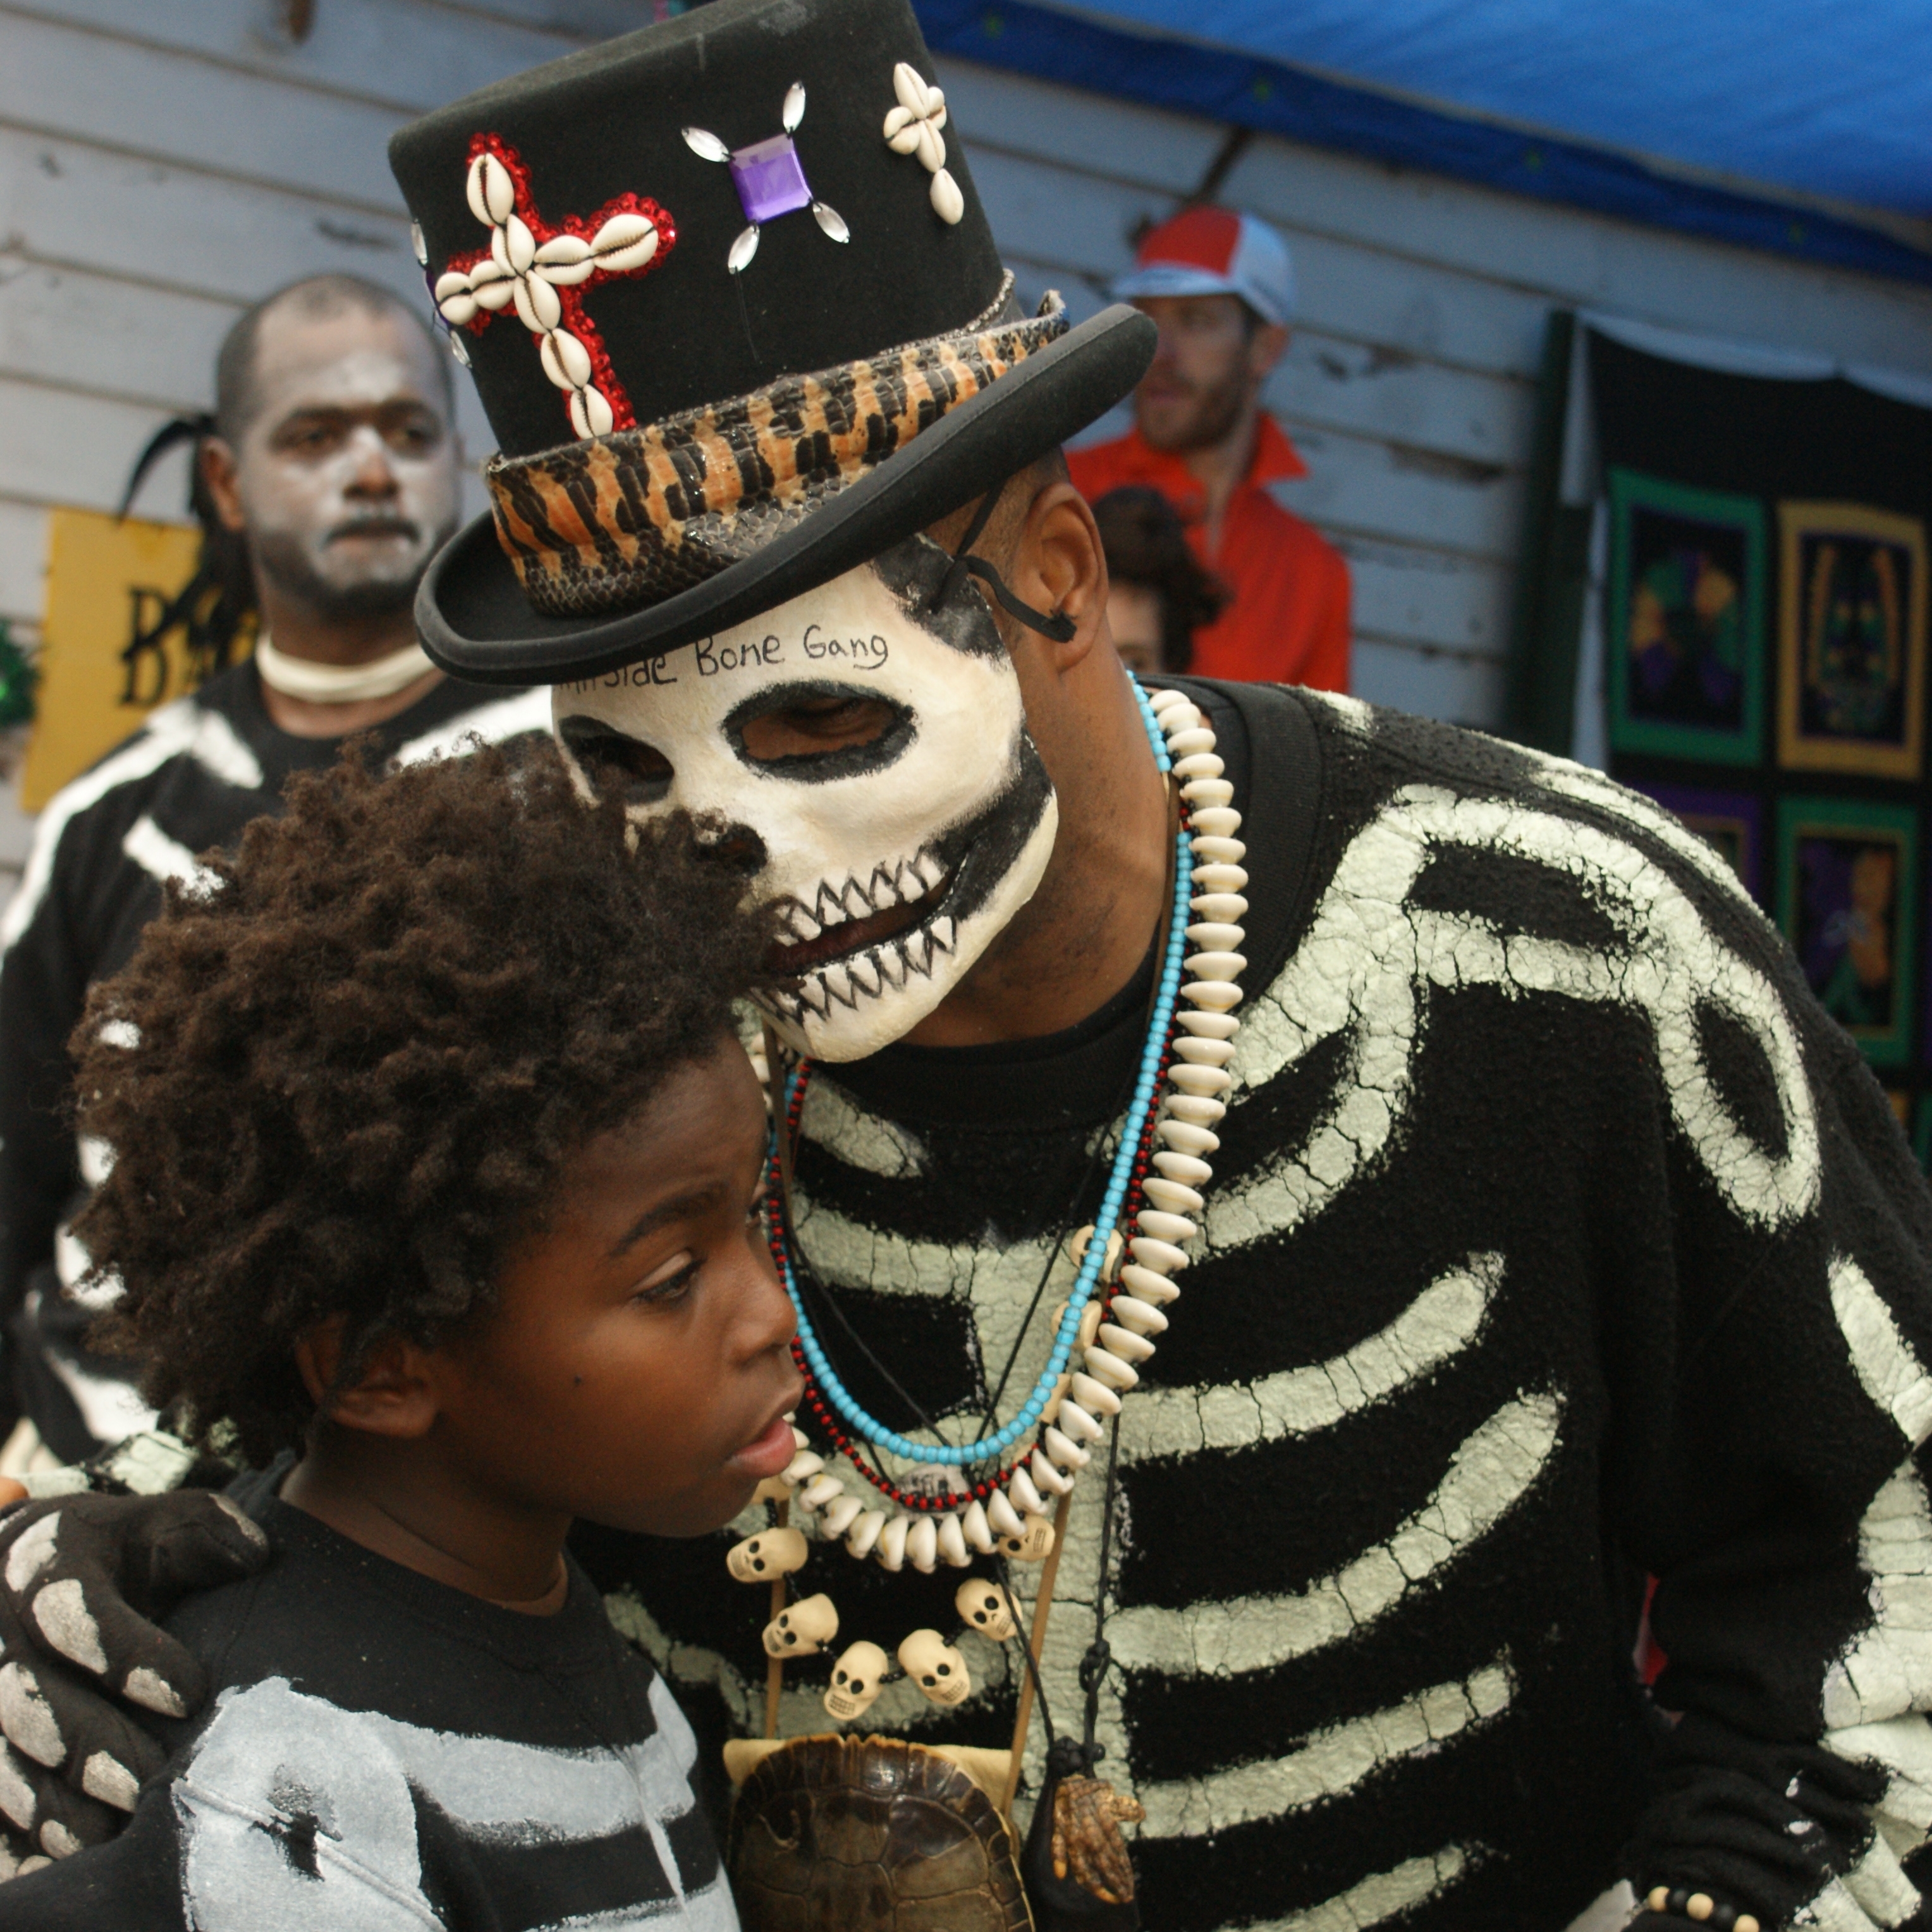 Skull & Bones Krewe: Building Community through the Arts